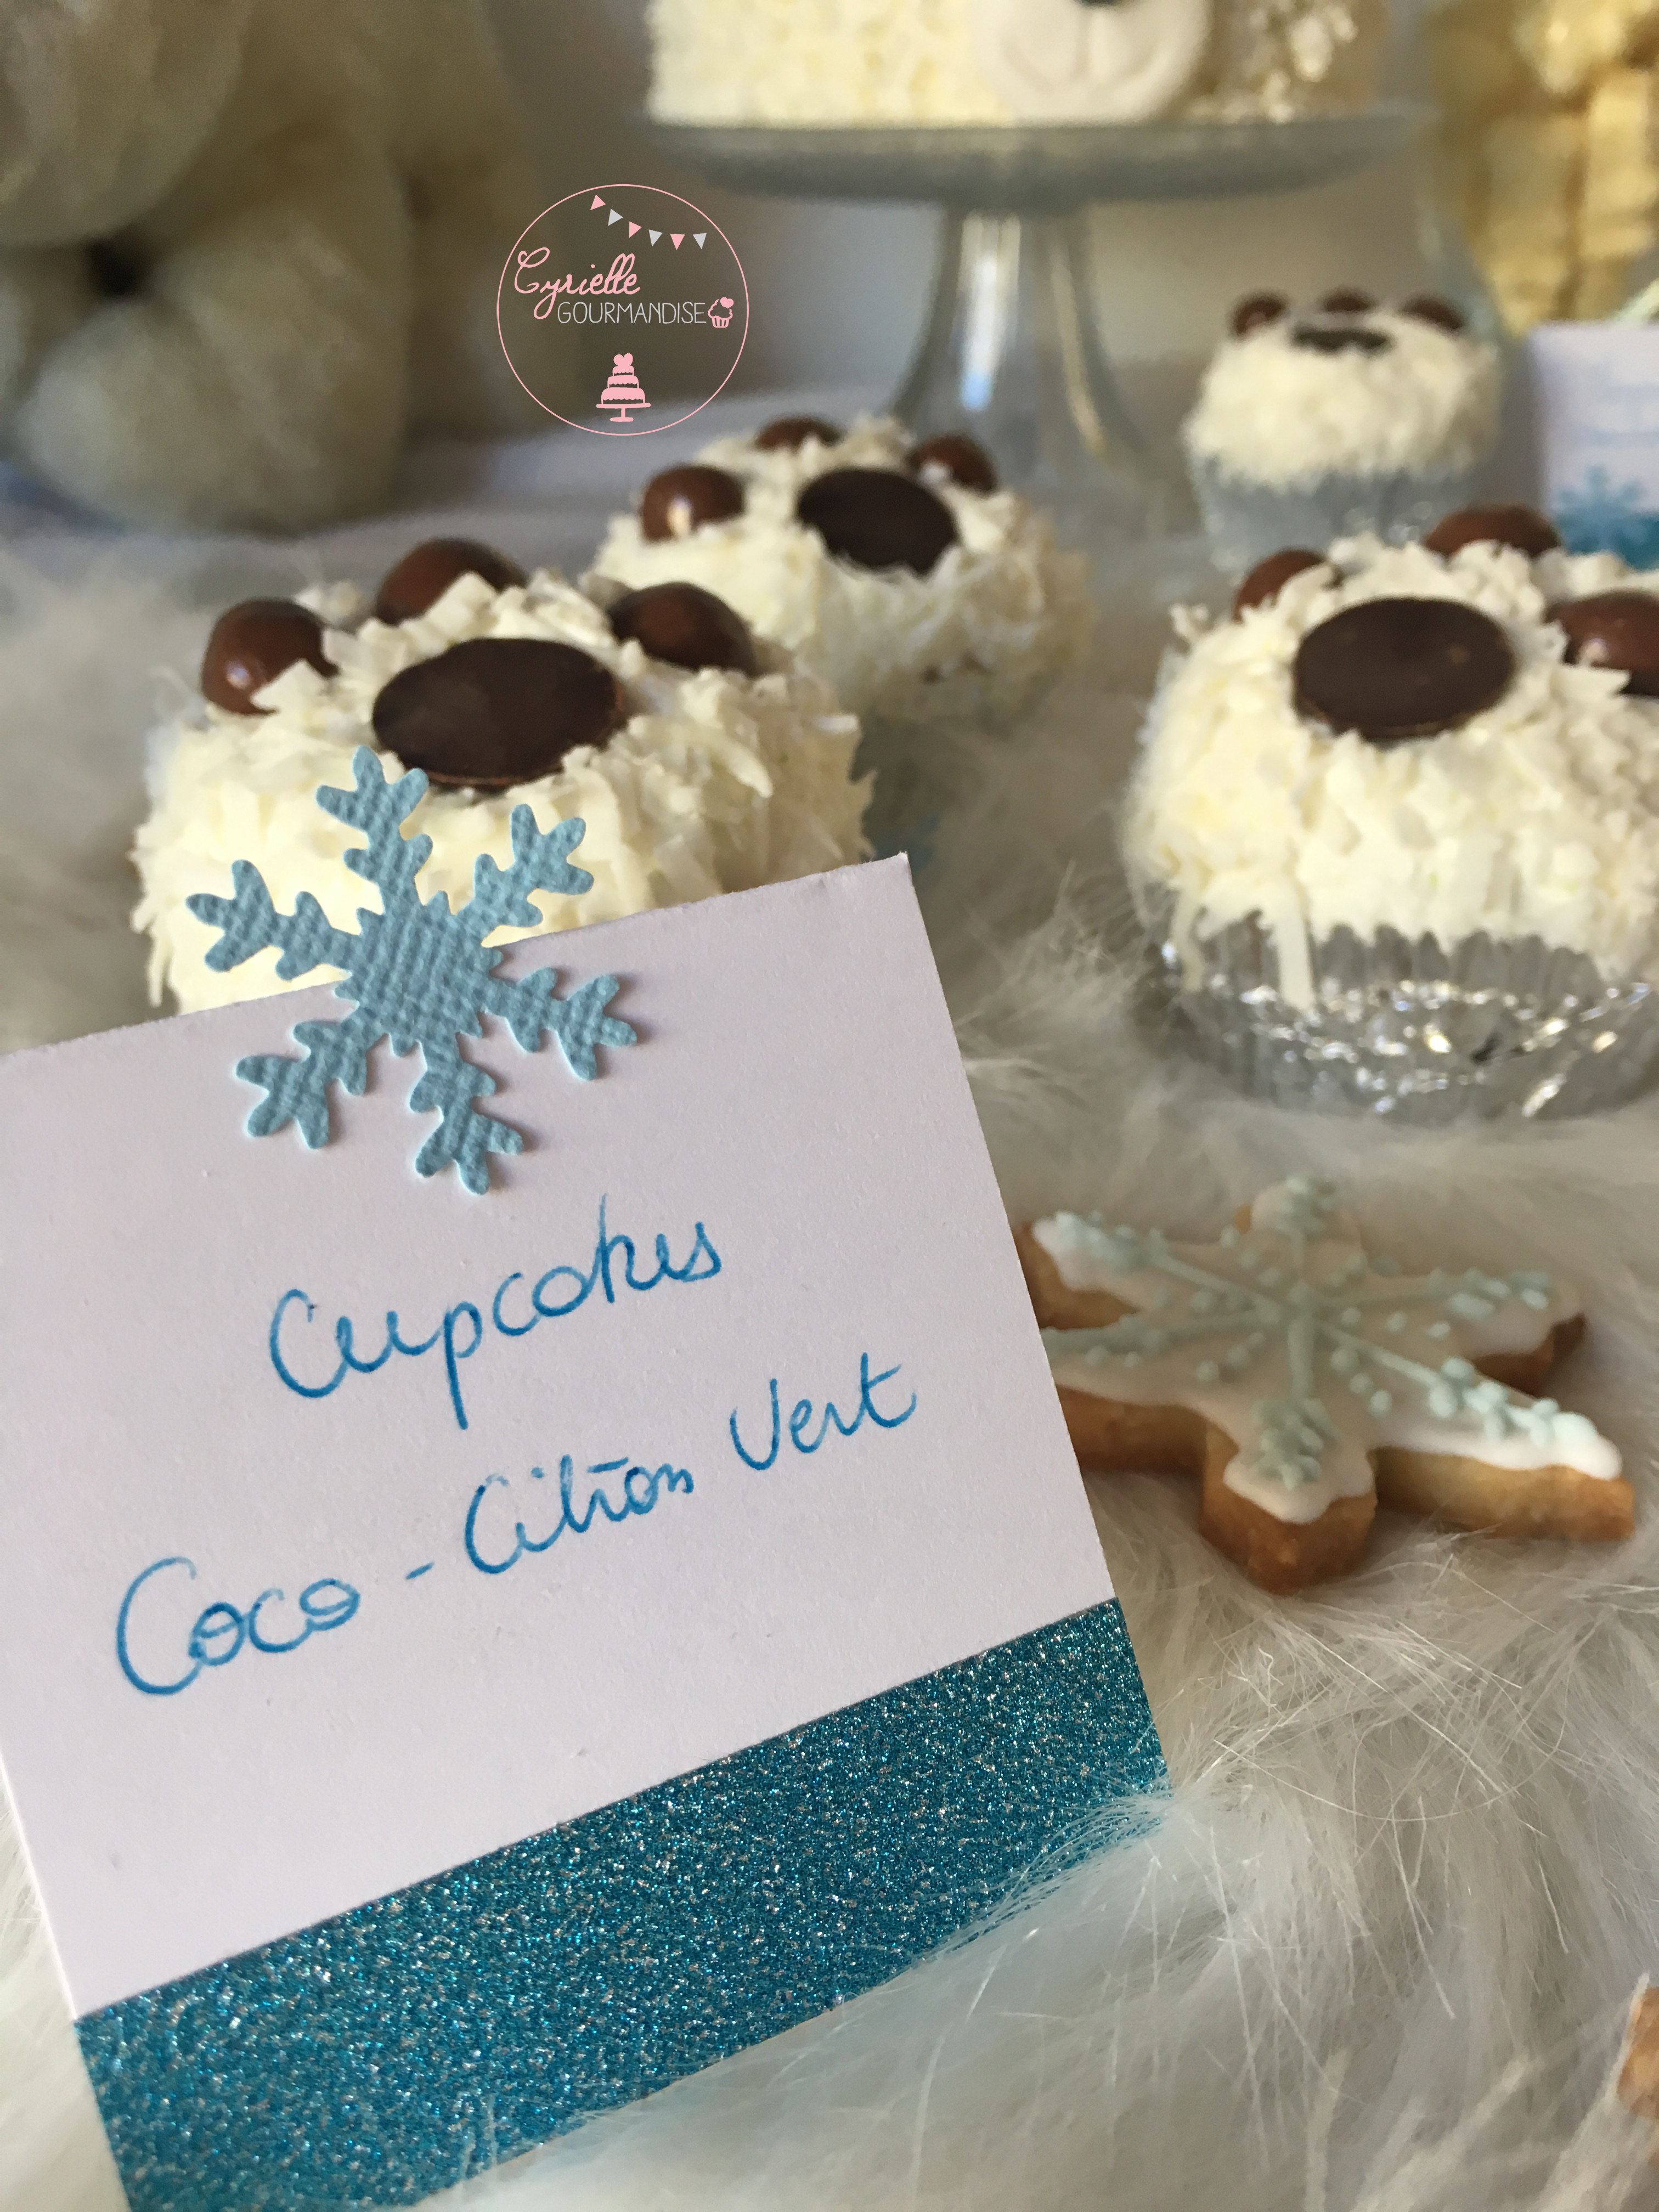 Cupcakes Coco Citron Vert 2